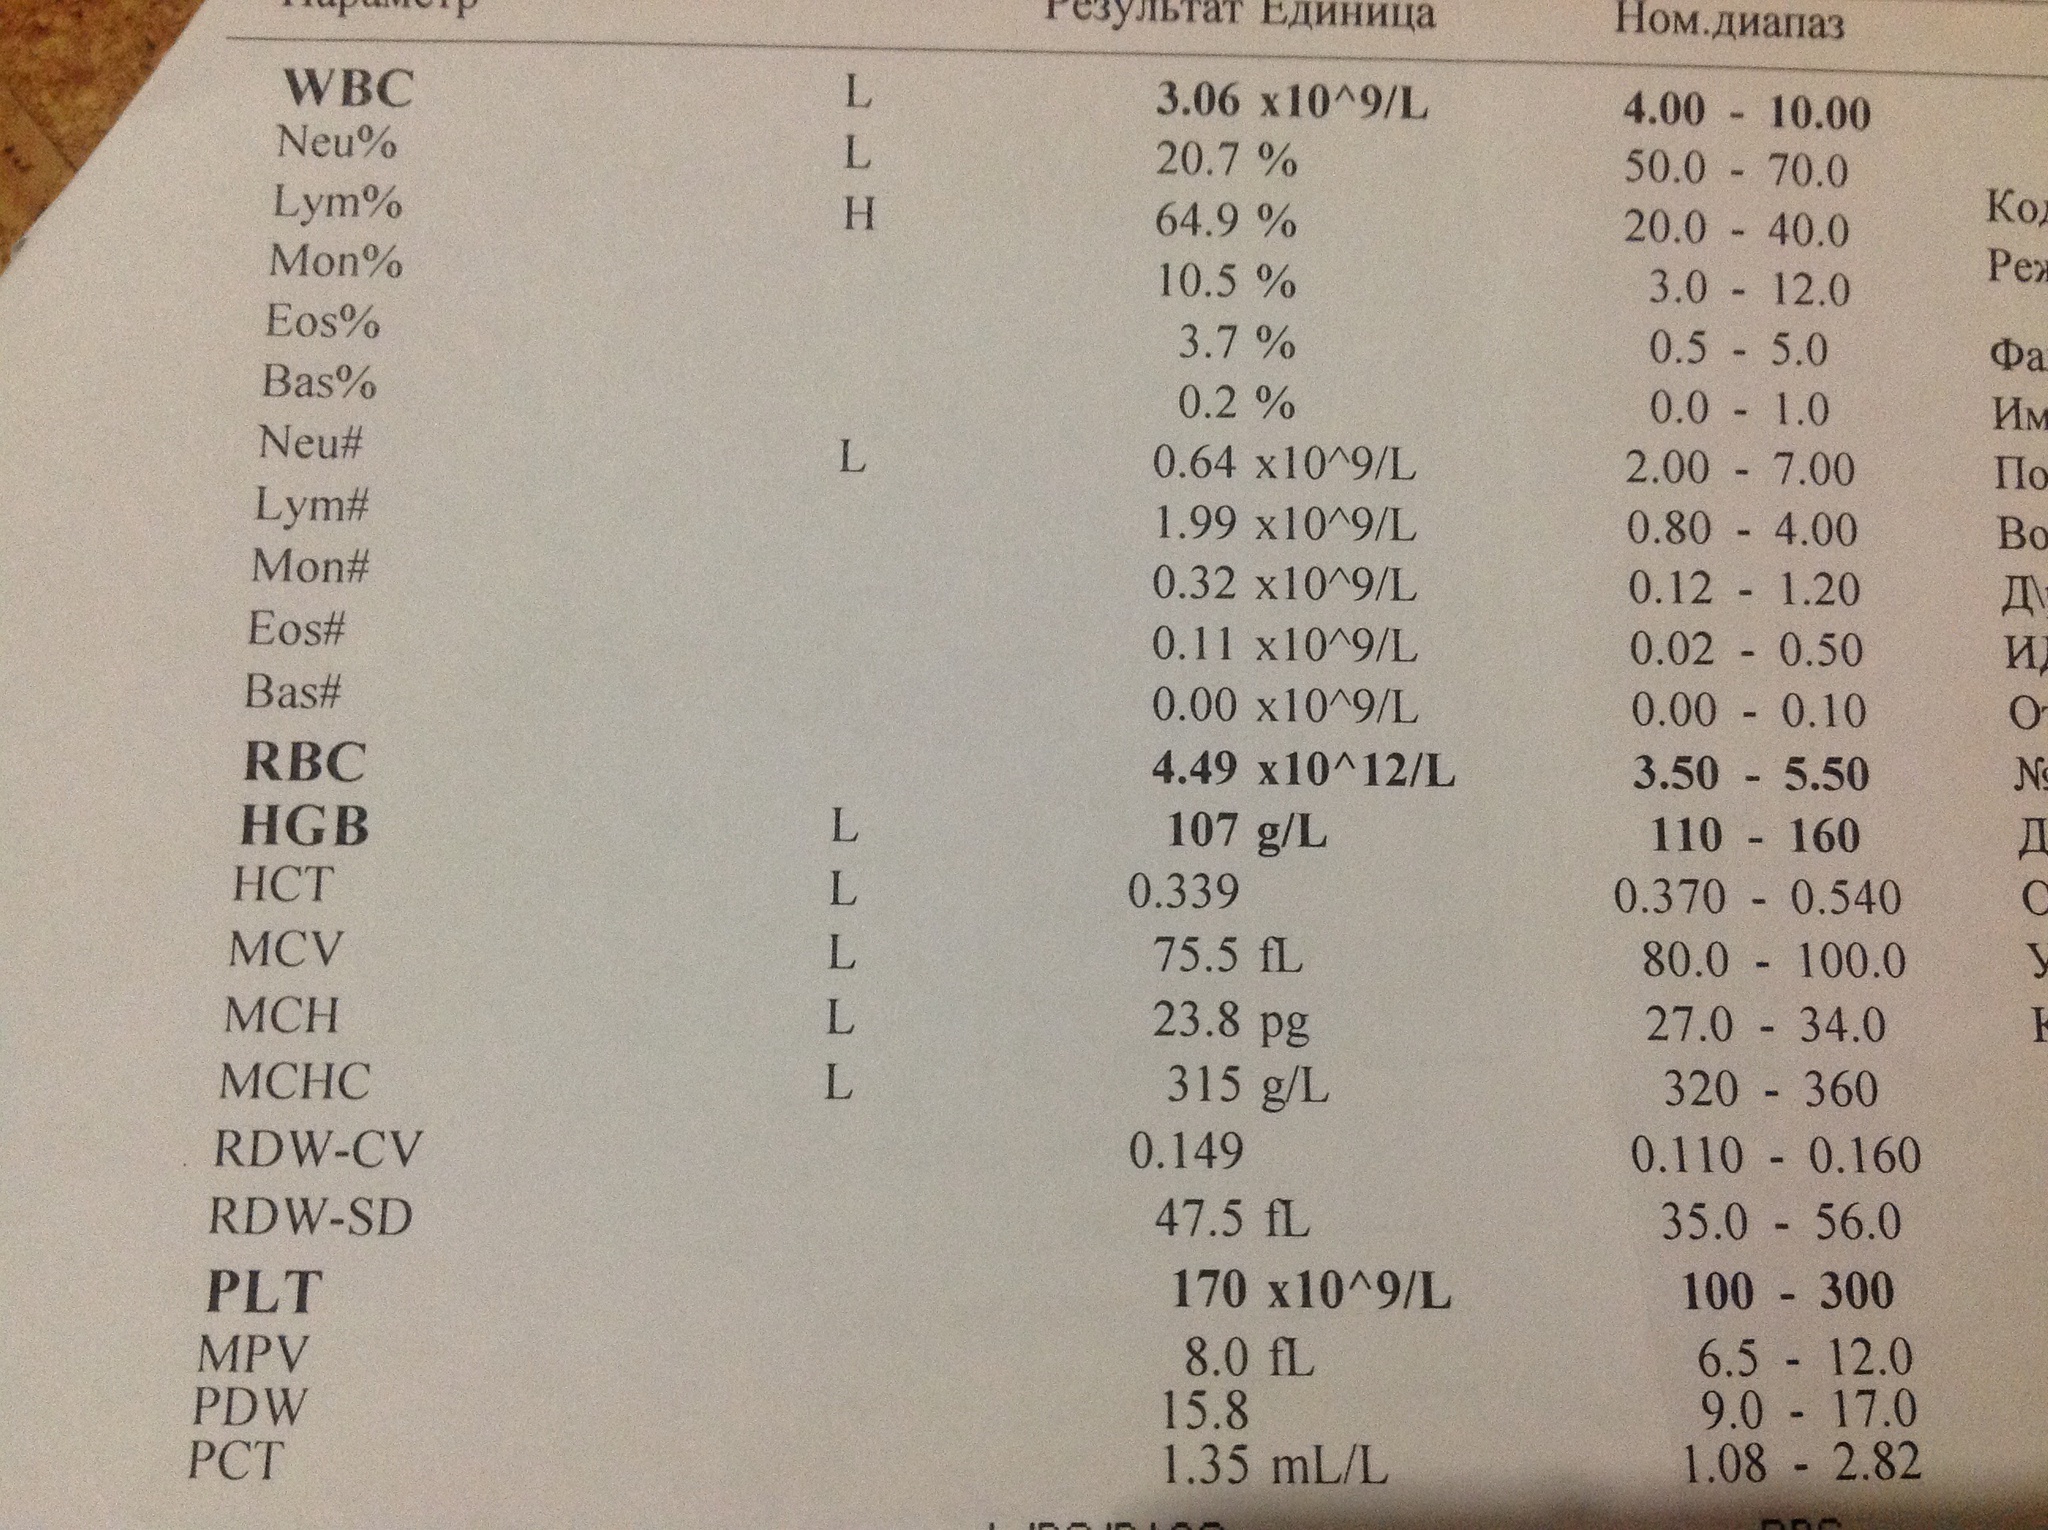 Rbc в крови у мужчин. Расшифровка анализа крови WBC что это и норма. Расшифровка анализа крови MBC. Нормы MCV MCH MCHC. Neu в анализе крови у ребенка норма.